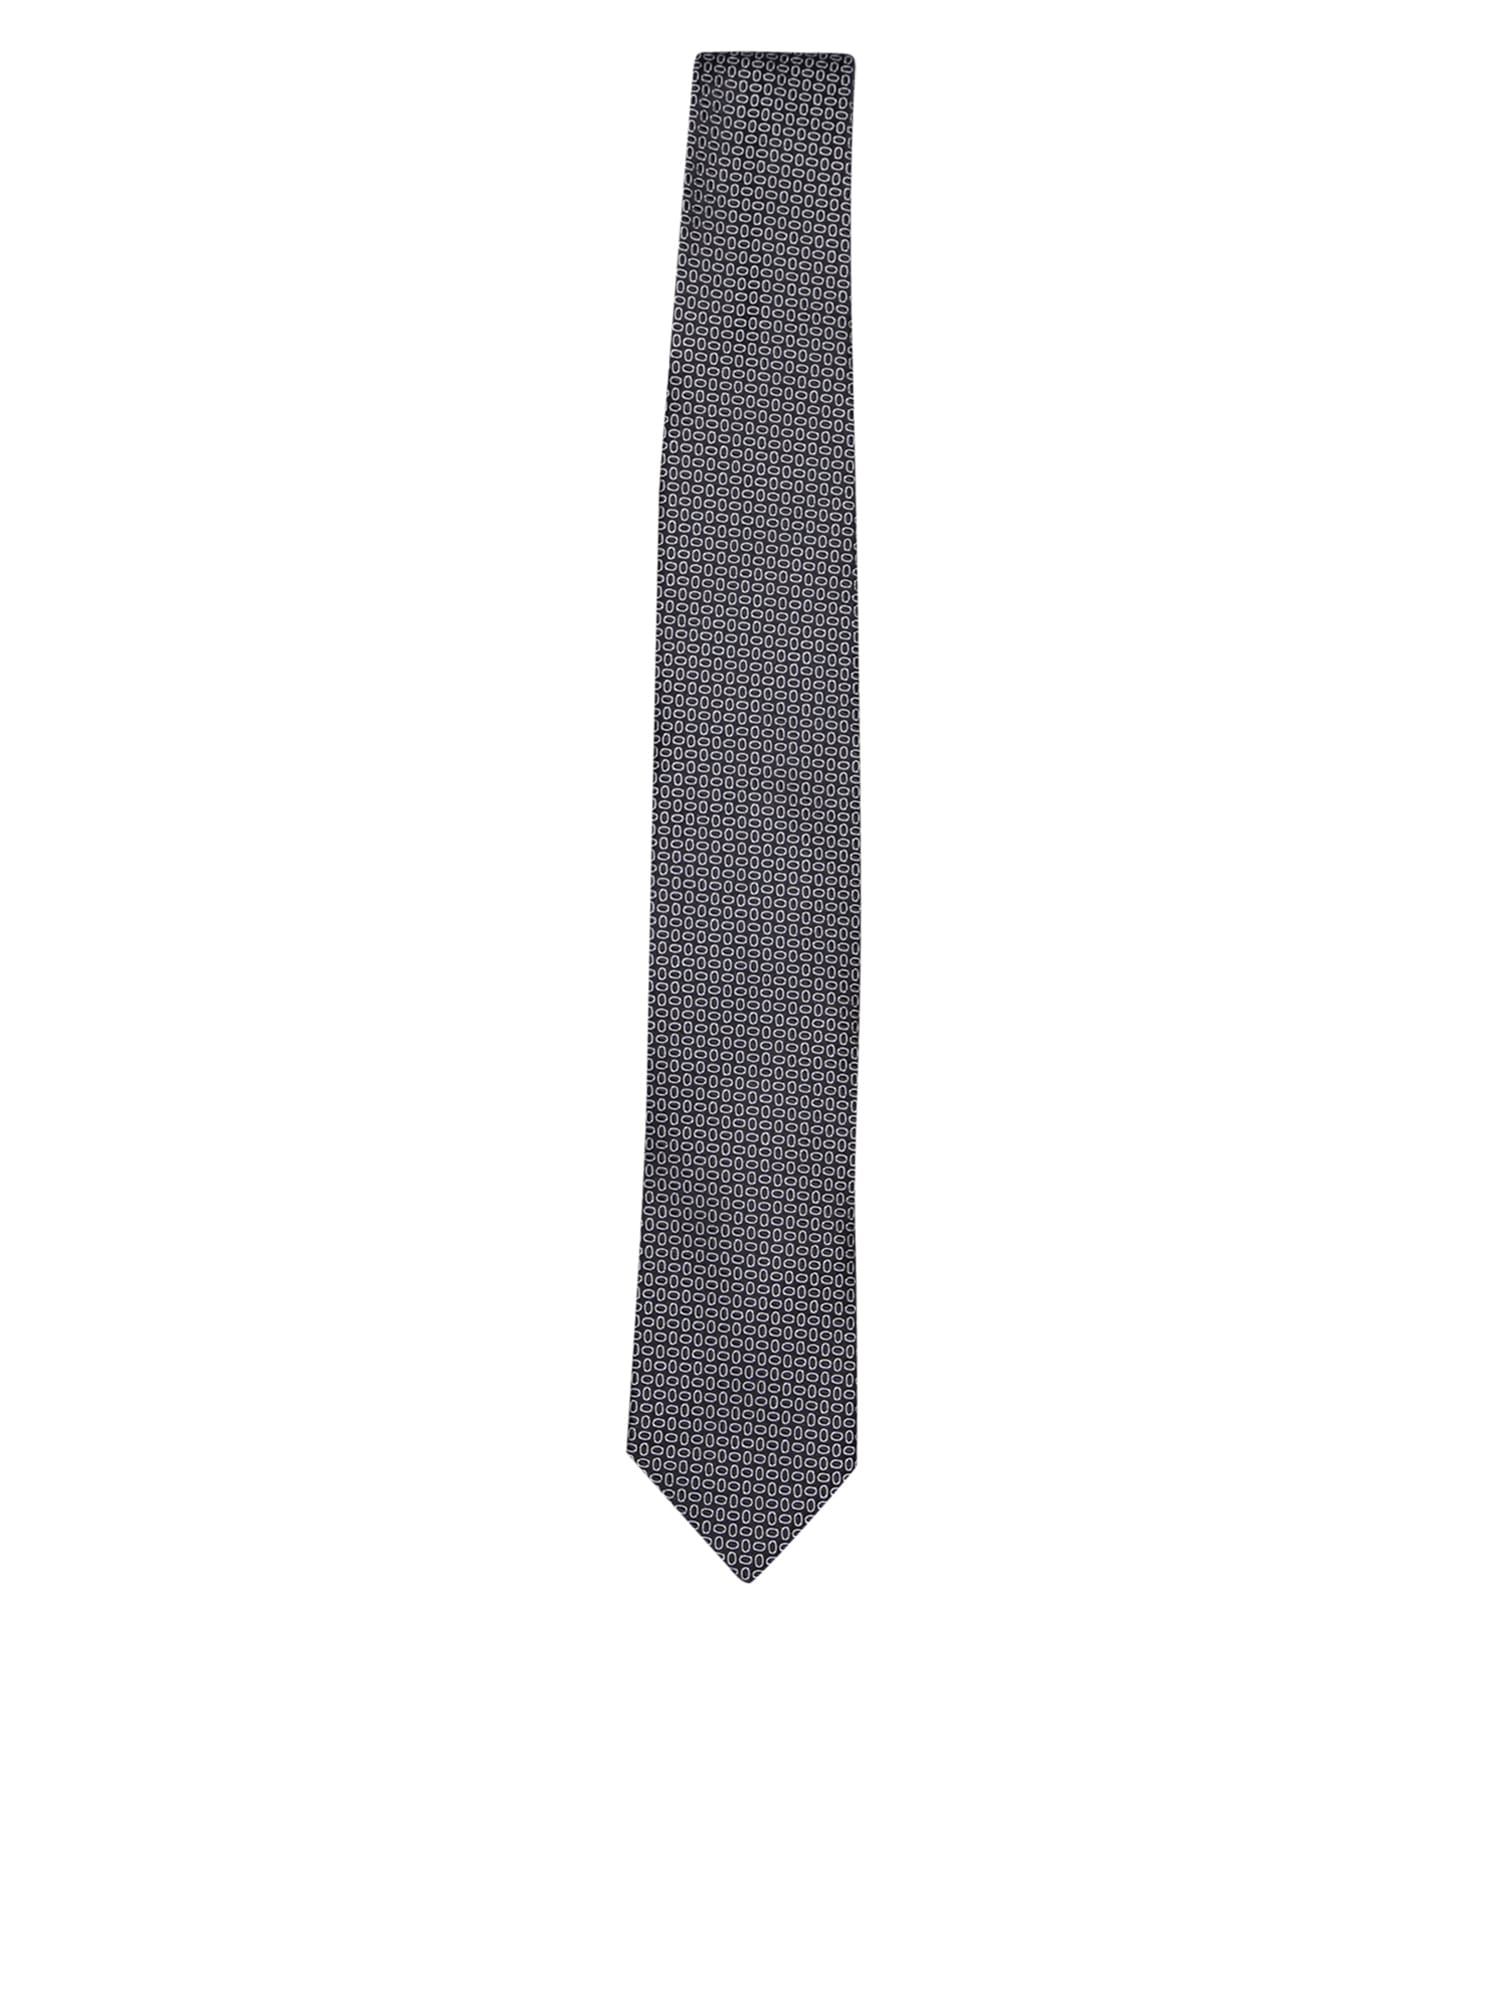 Micro Pattern Black/grey Tie